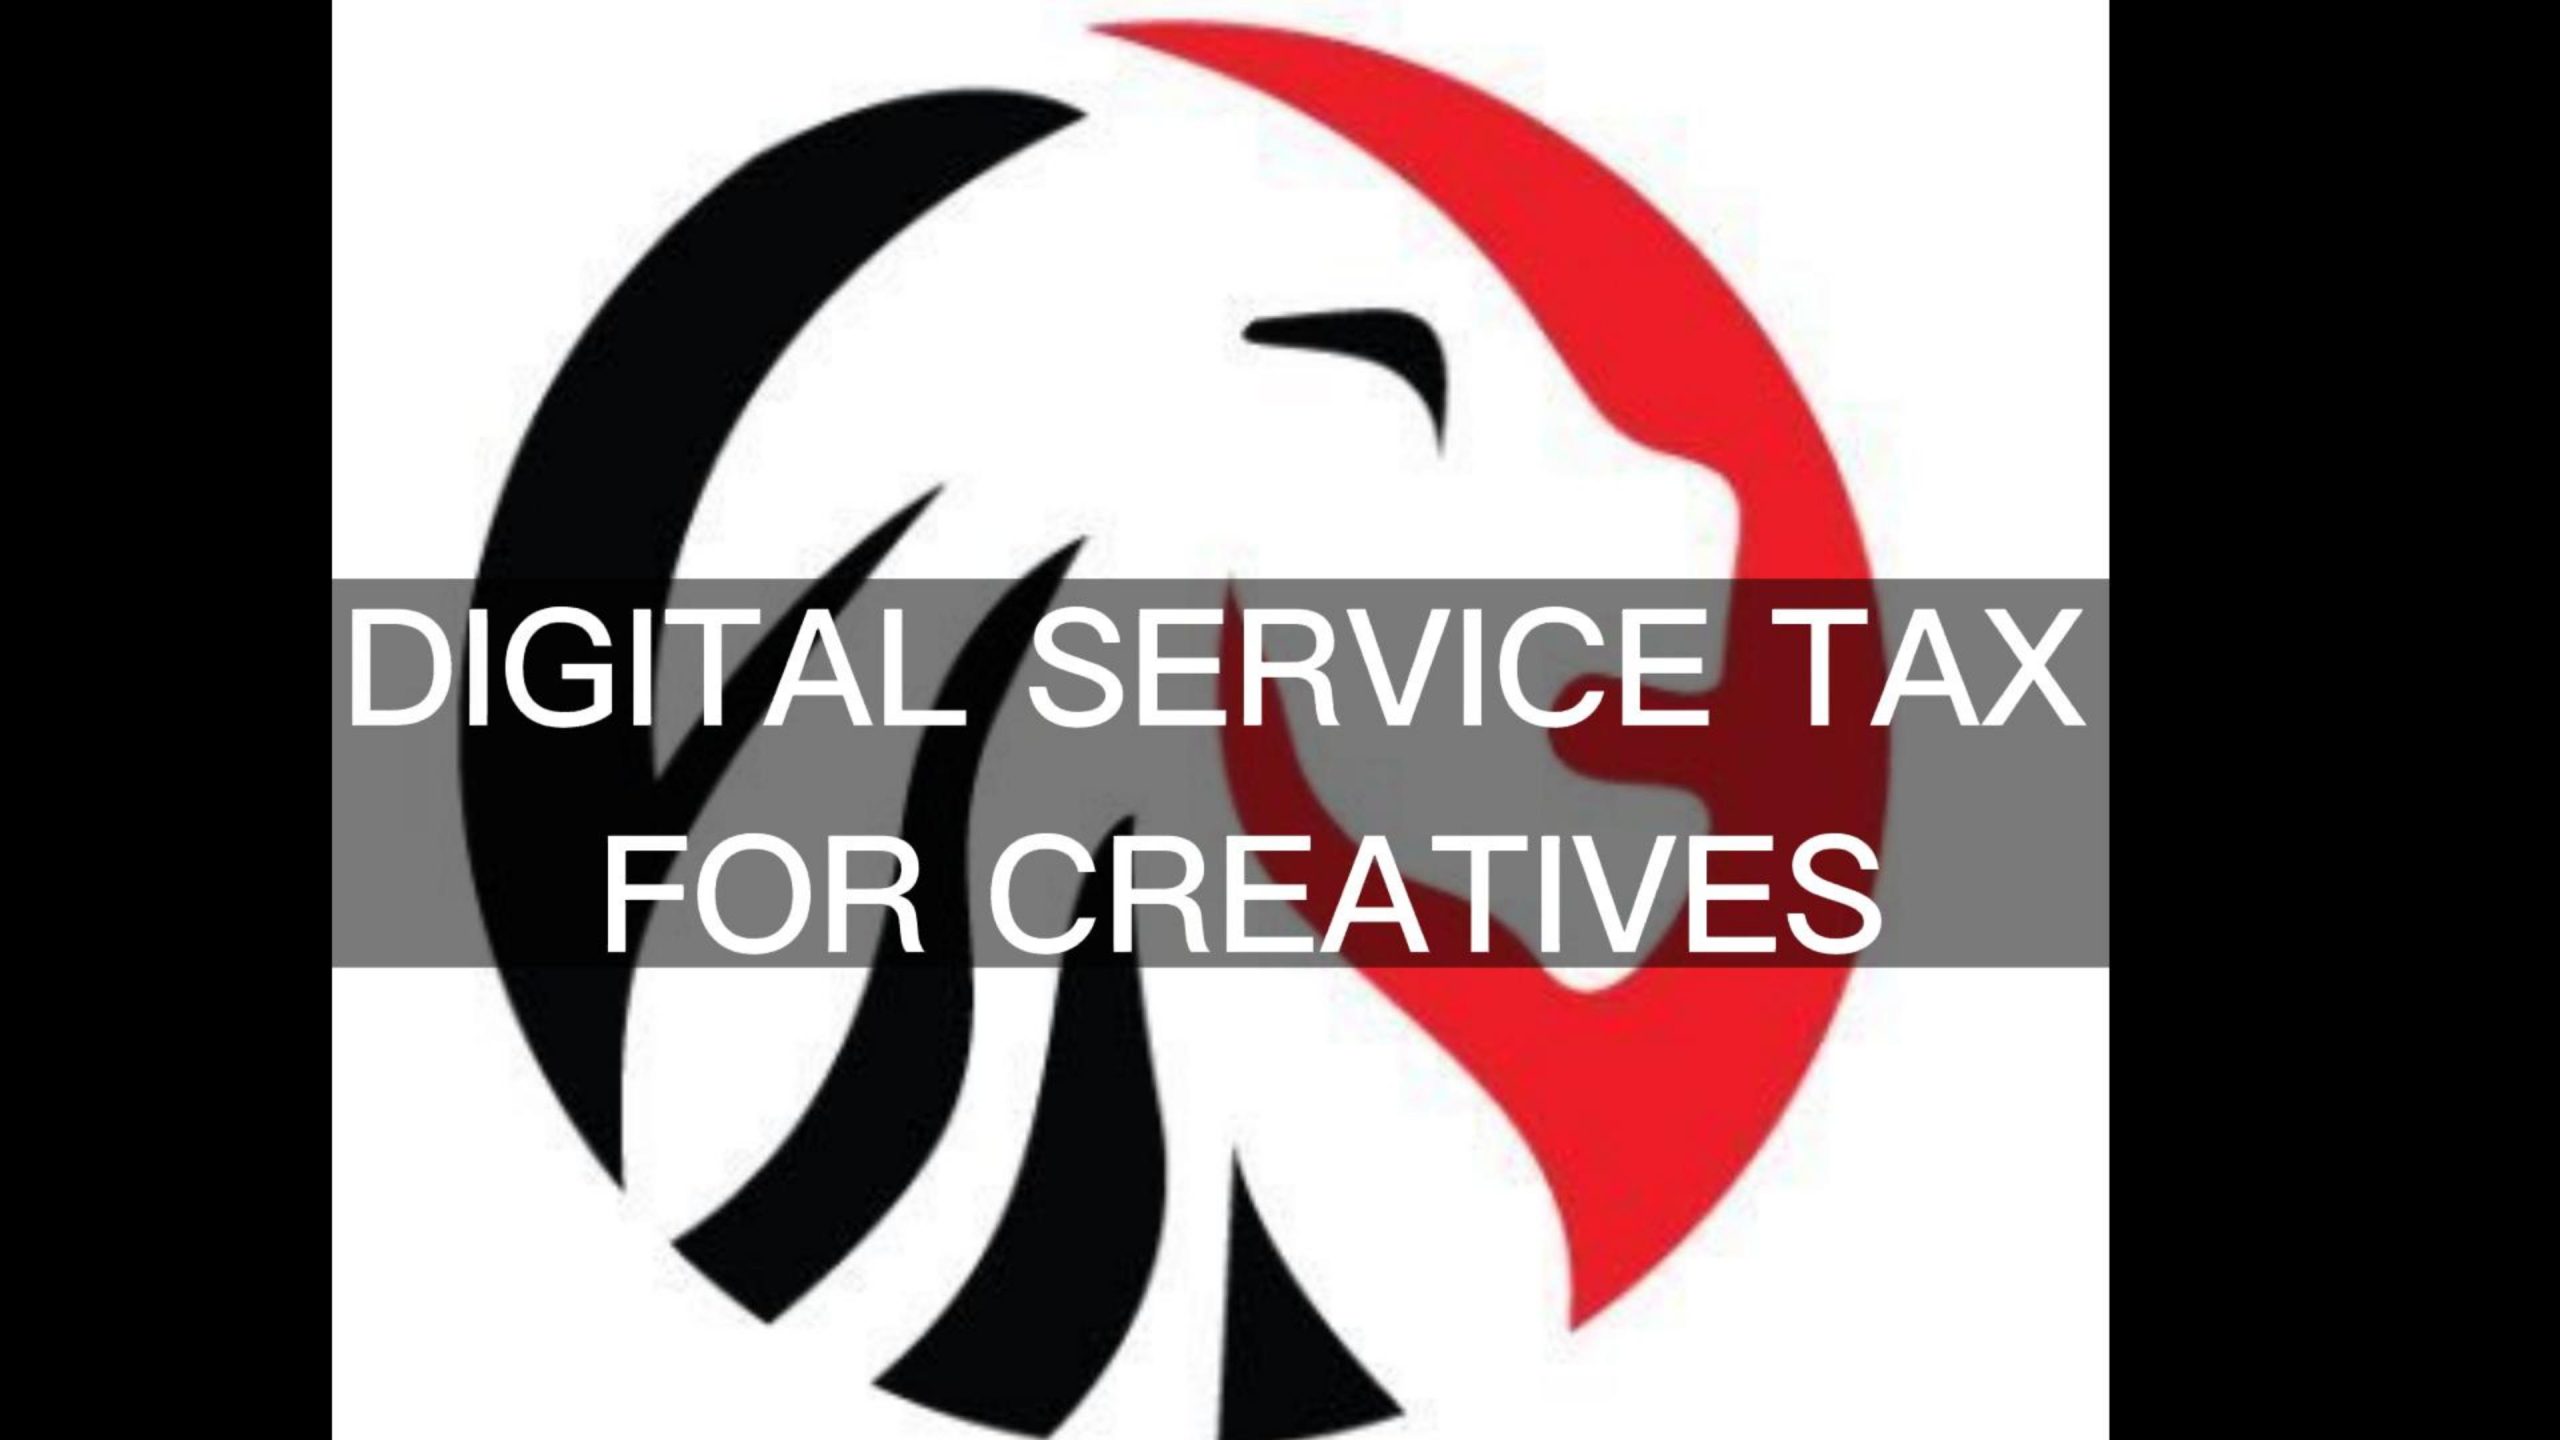 Digital Service Tax for Creatives